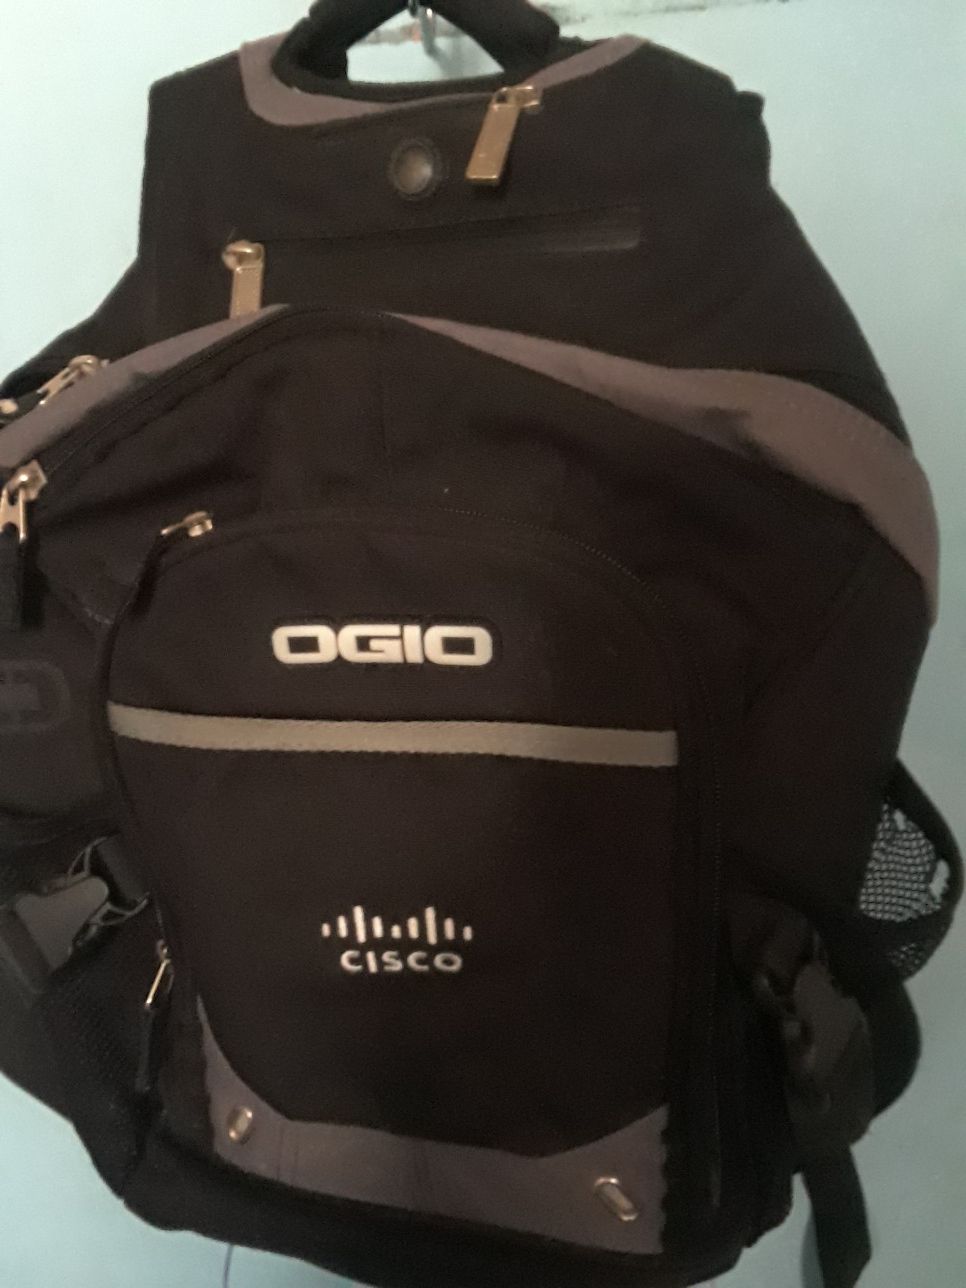 Ohio Cisco backpack